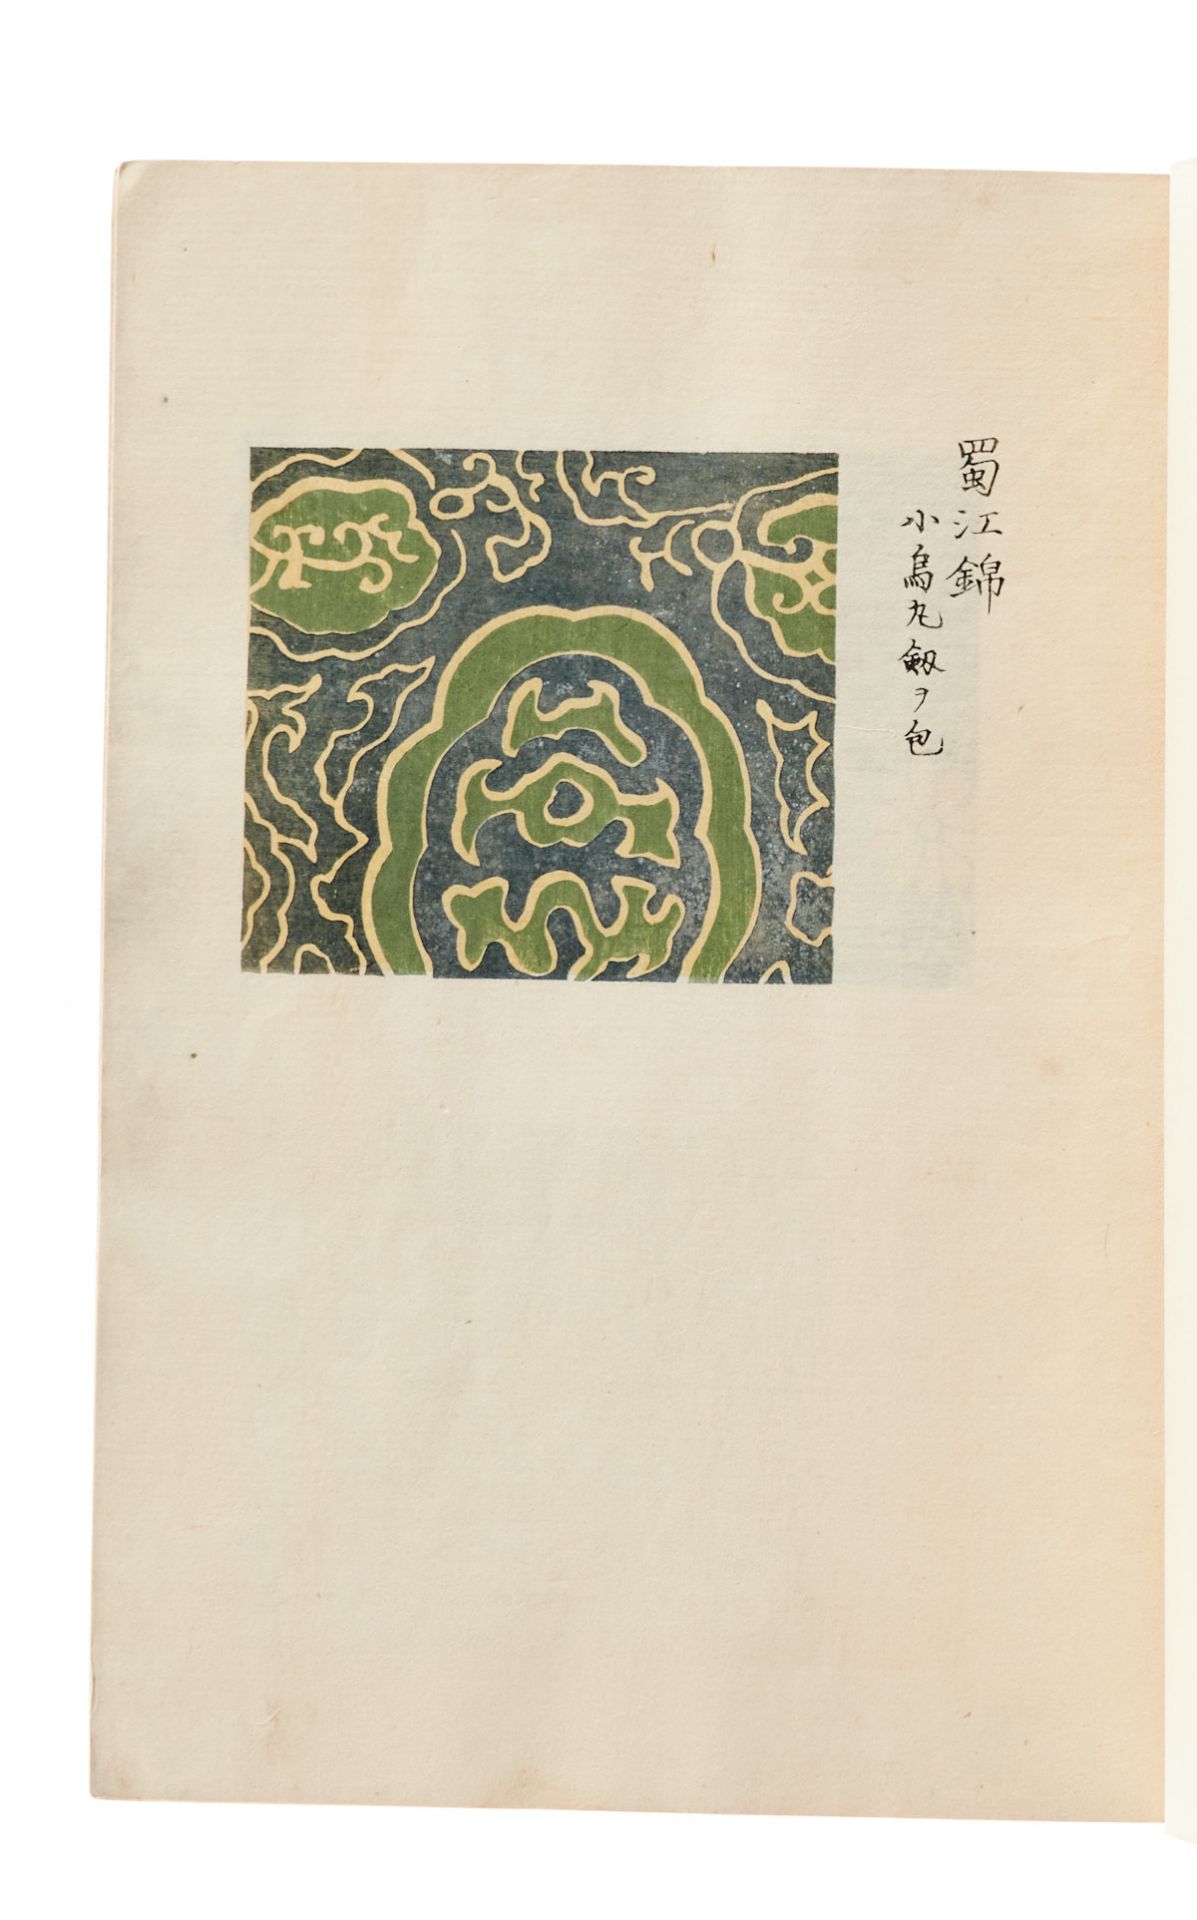 Ostasien Japan Tokikata, Matsuoka, Shokumon zue. 4 Bde. (von 6). Japan, Kansei 12 (1800) bis 1818. - Image 3 of 4